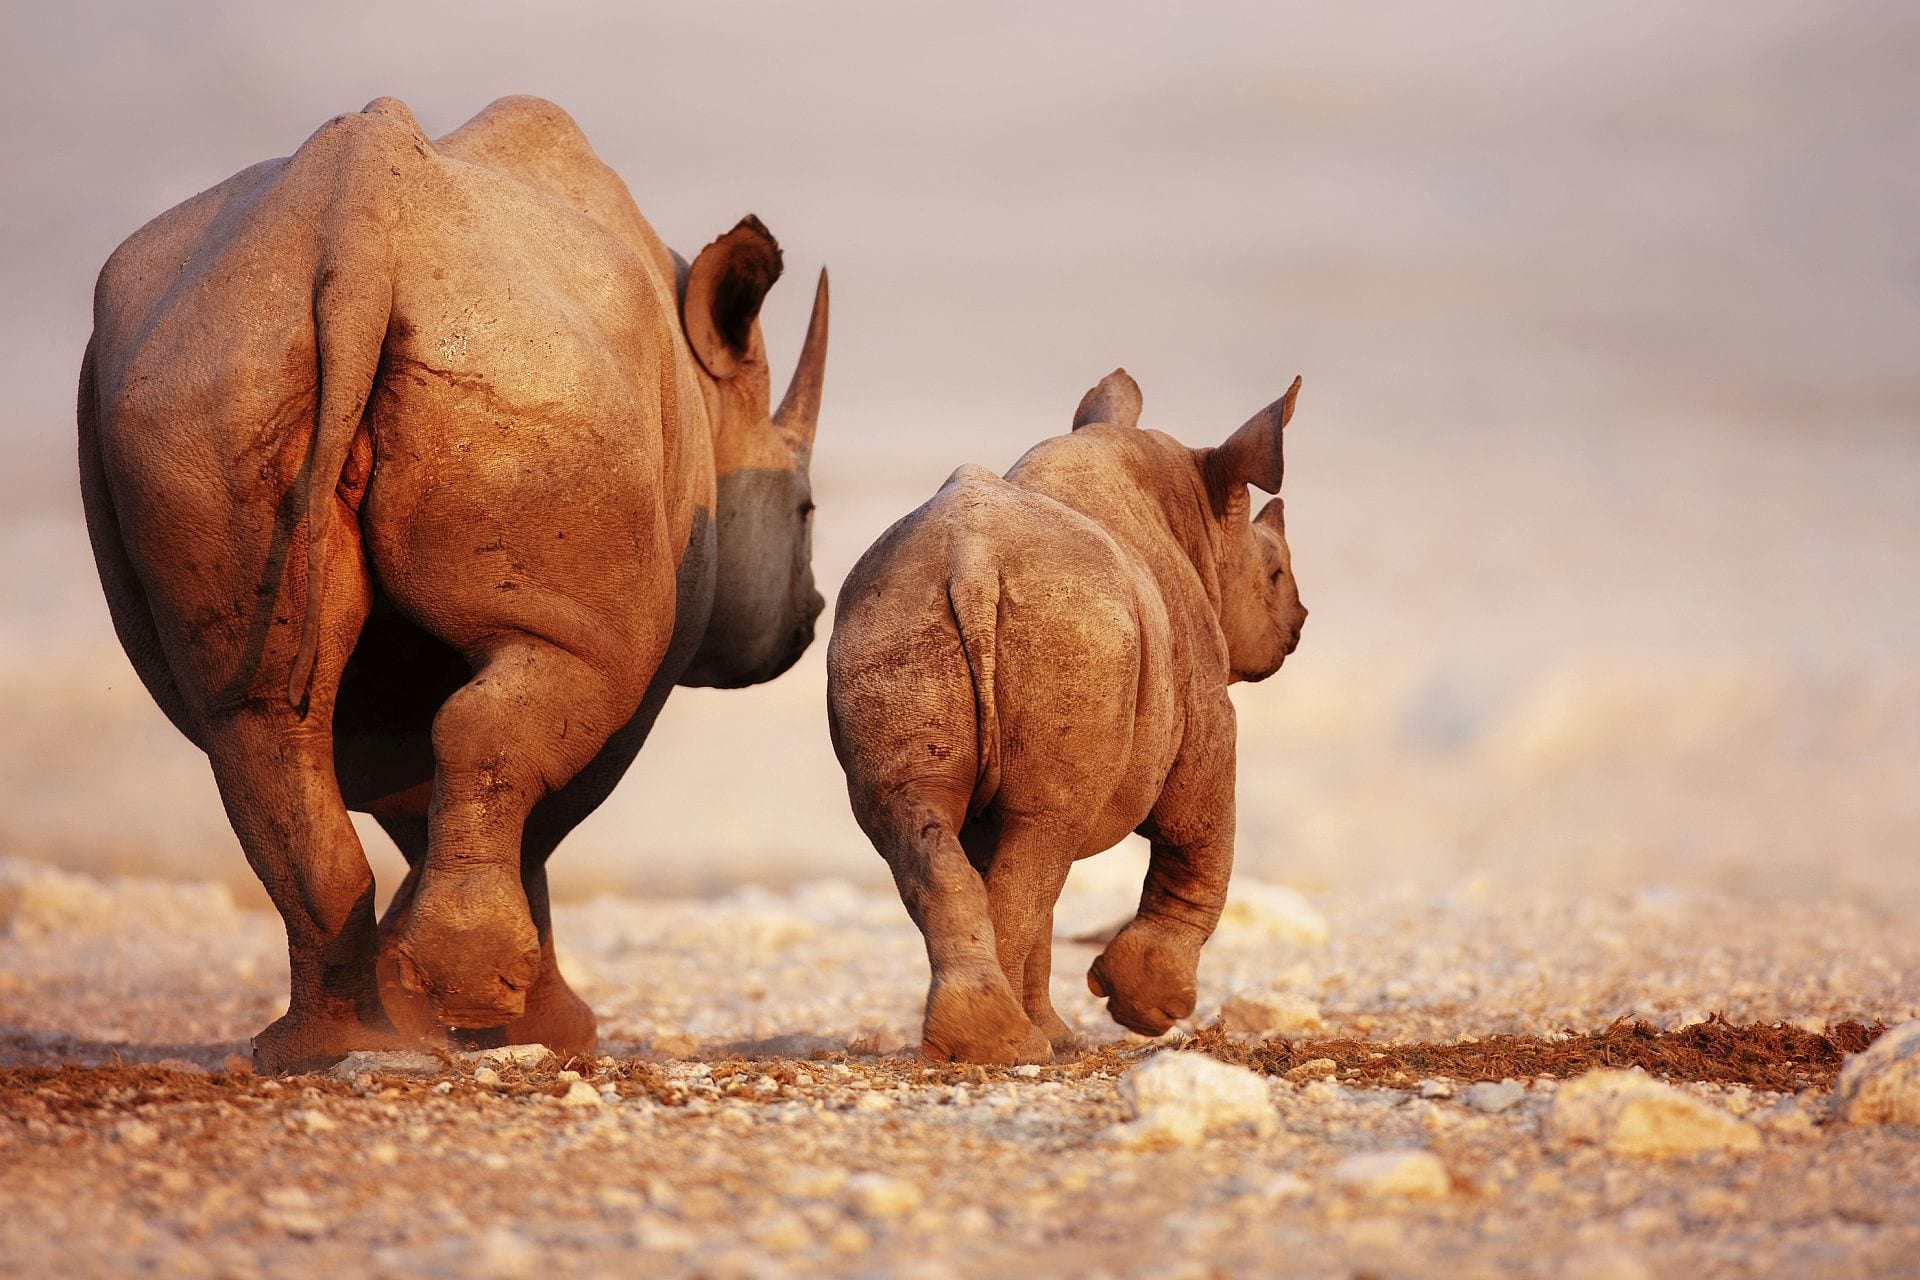 Rhino tracking on foot